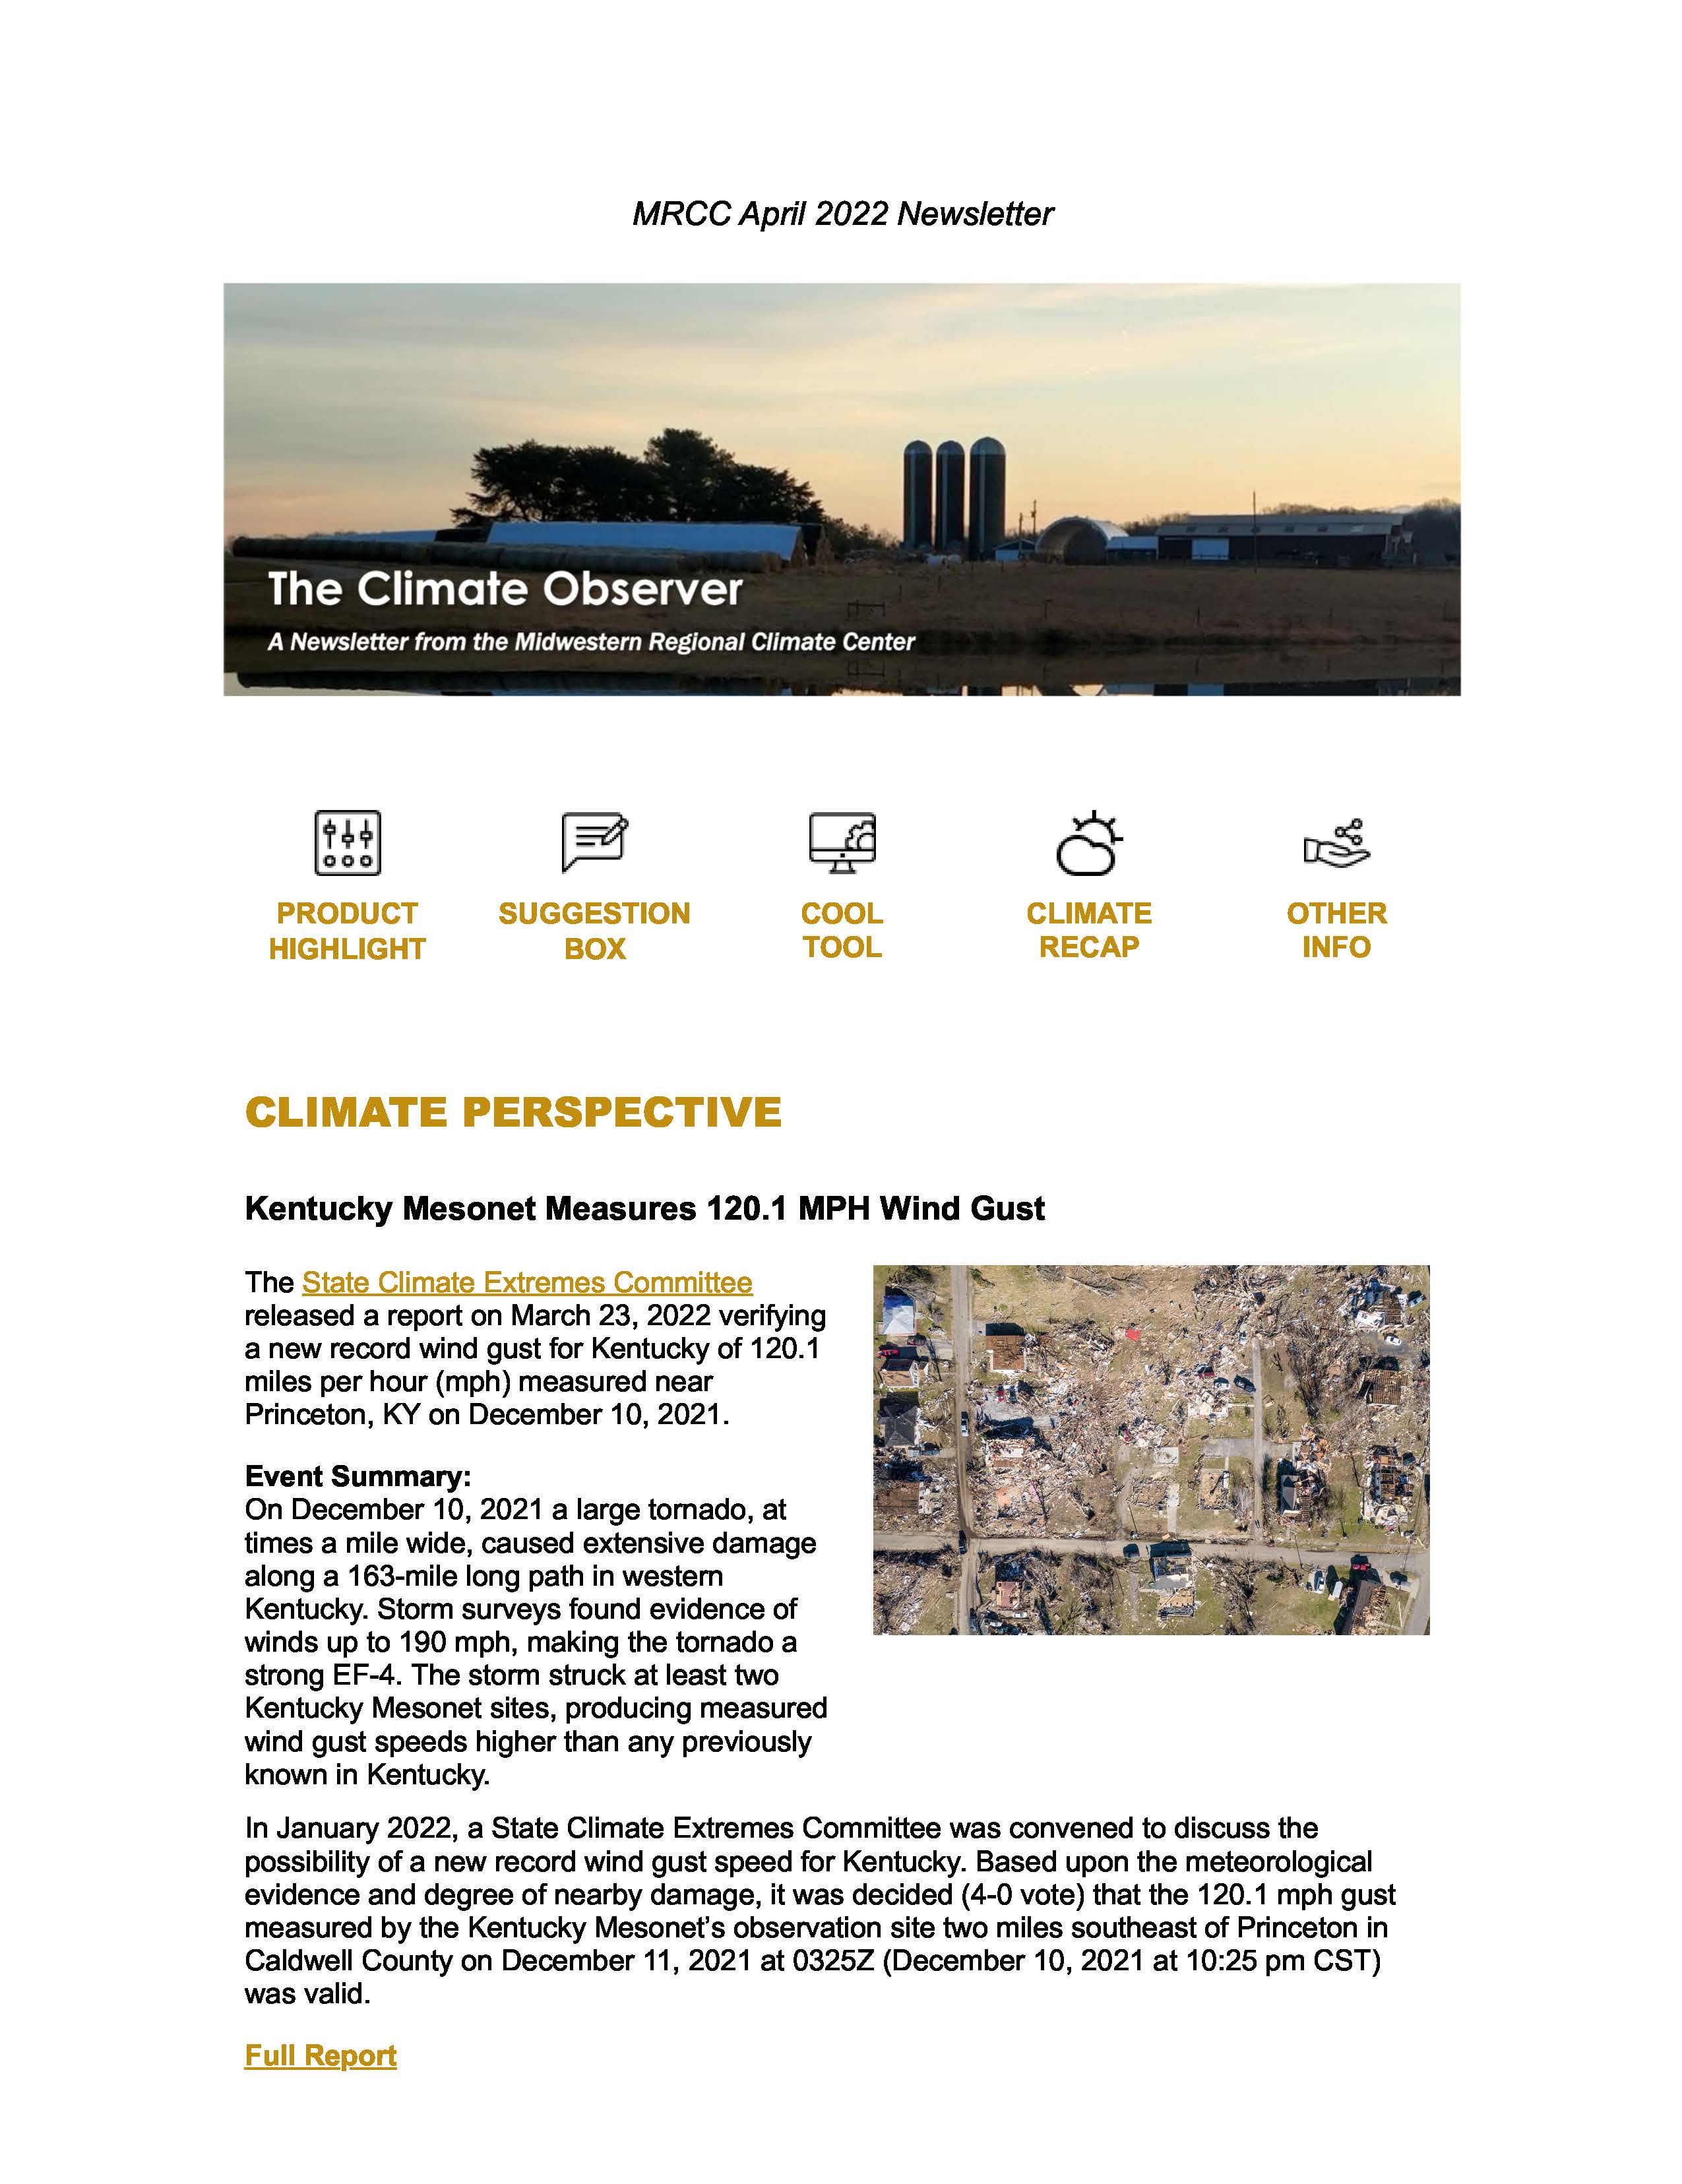 April 2022 "The Climate Observer"